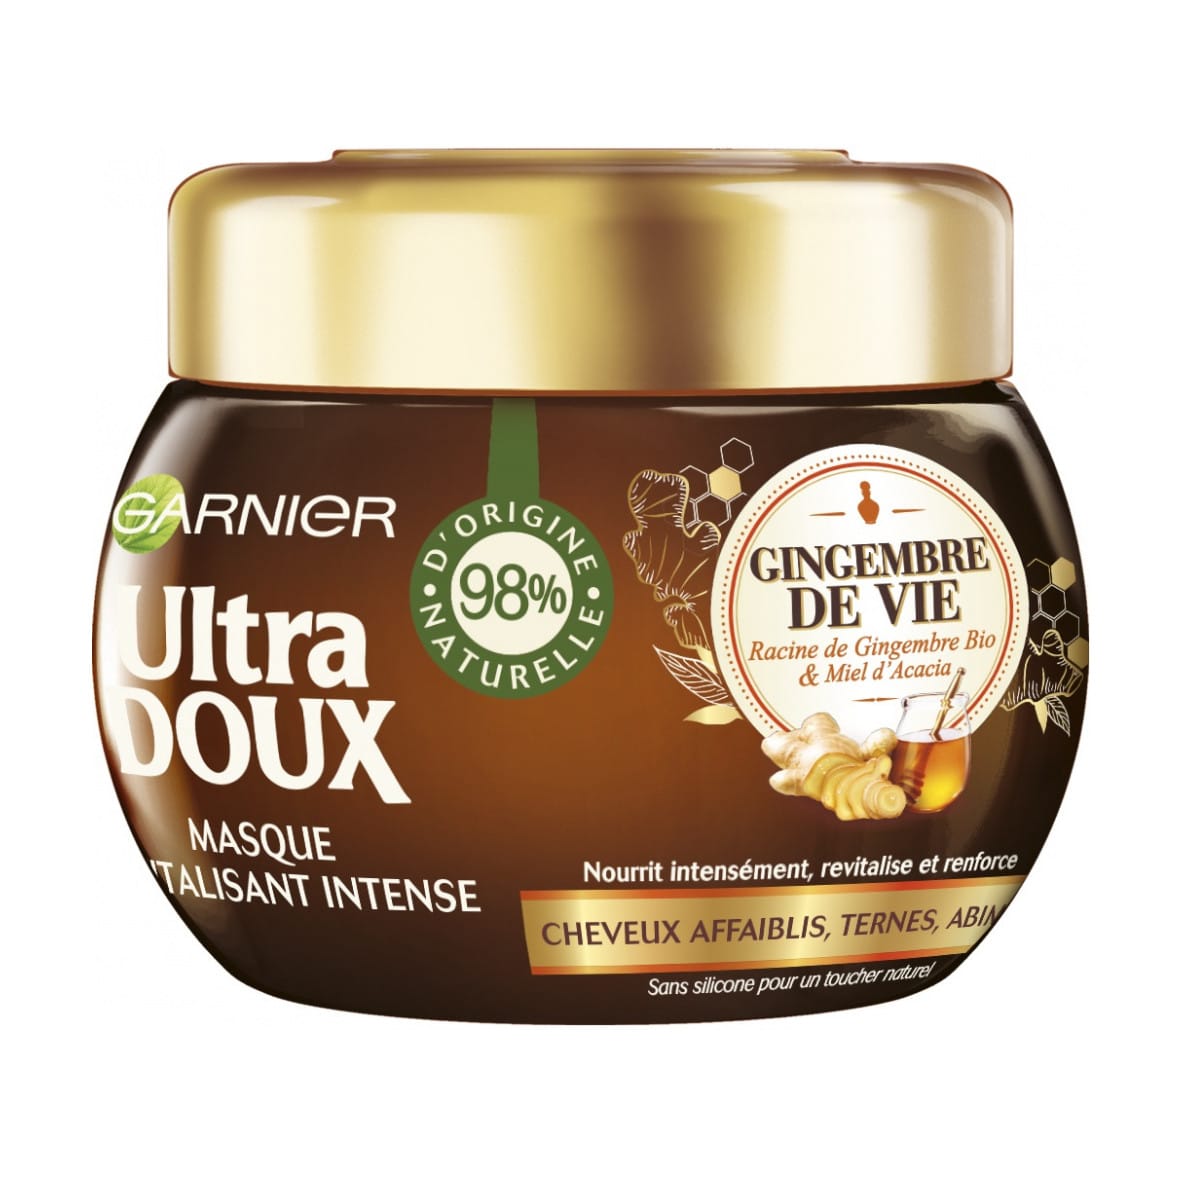 Garnier Ultra Doux Masque Revitalisant Intense Gingembre bio & Miel d’Acacia